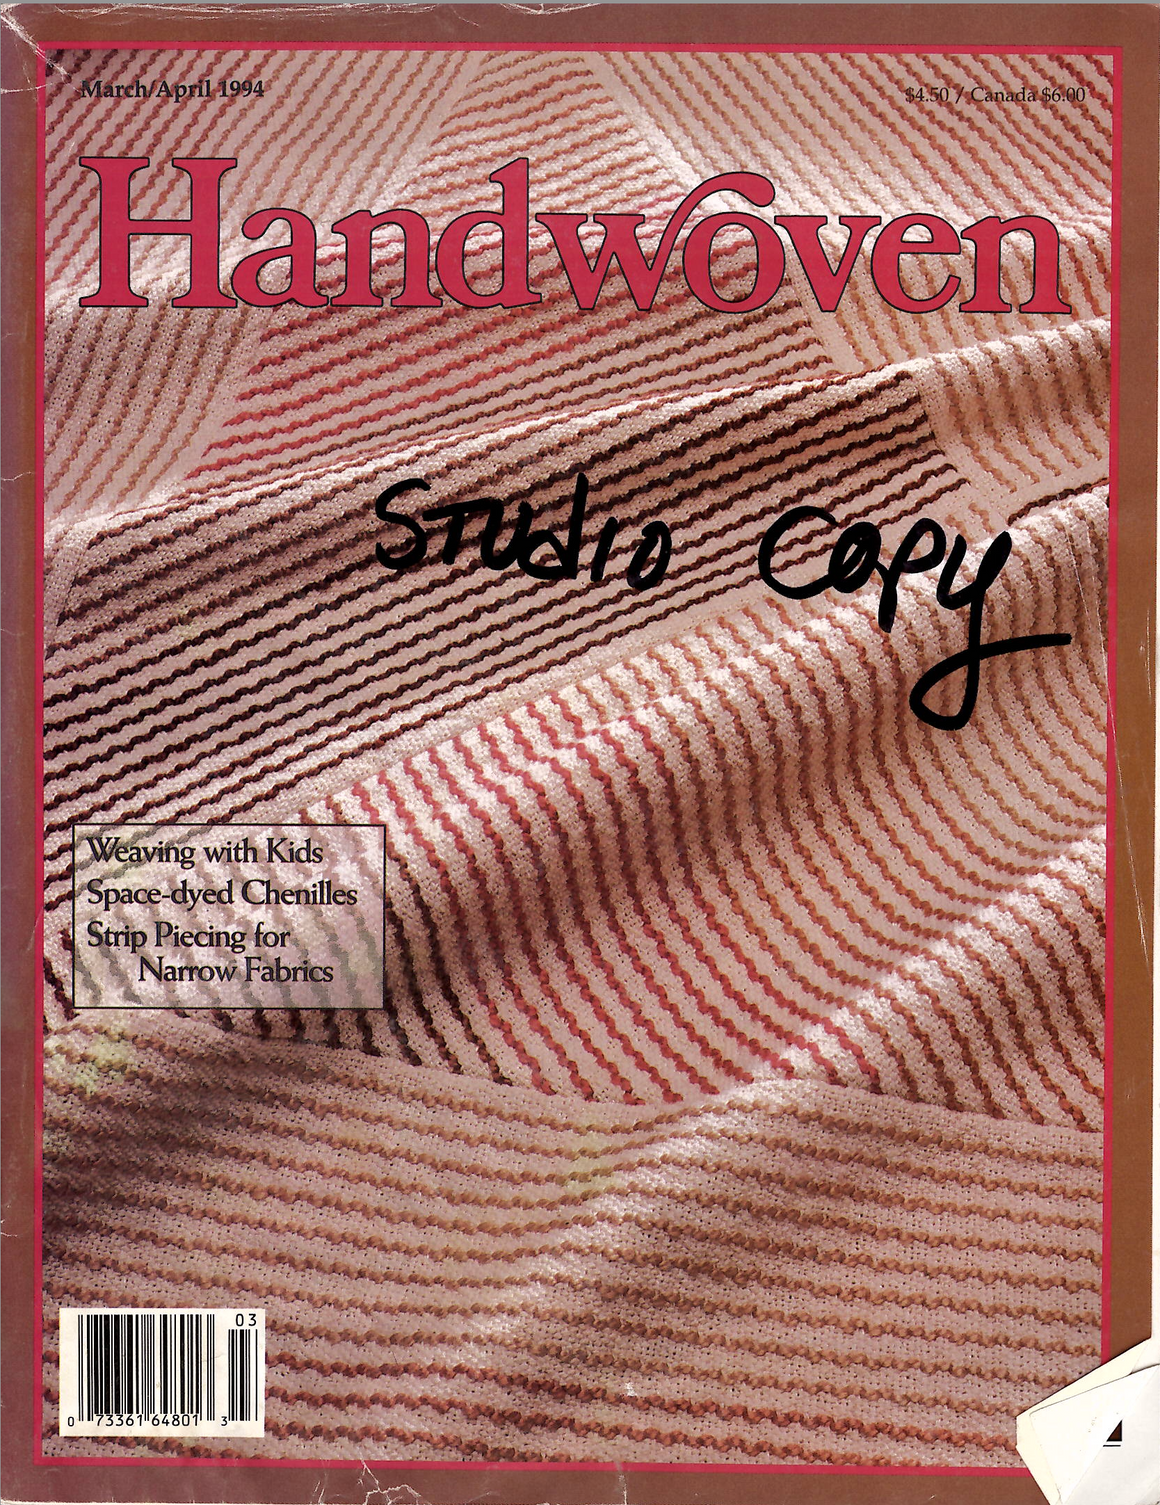 Handwoven March/April 1994